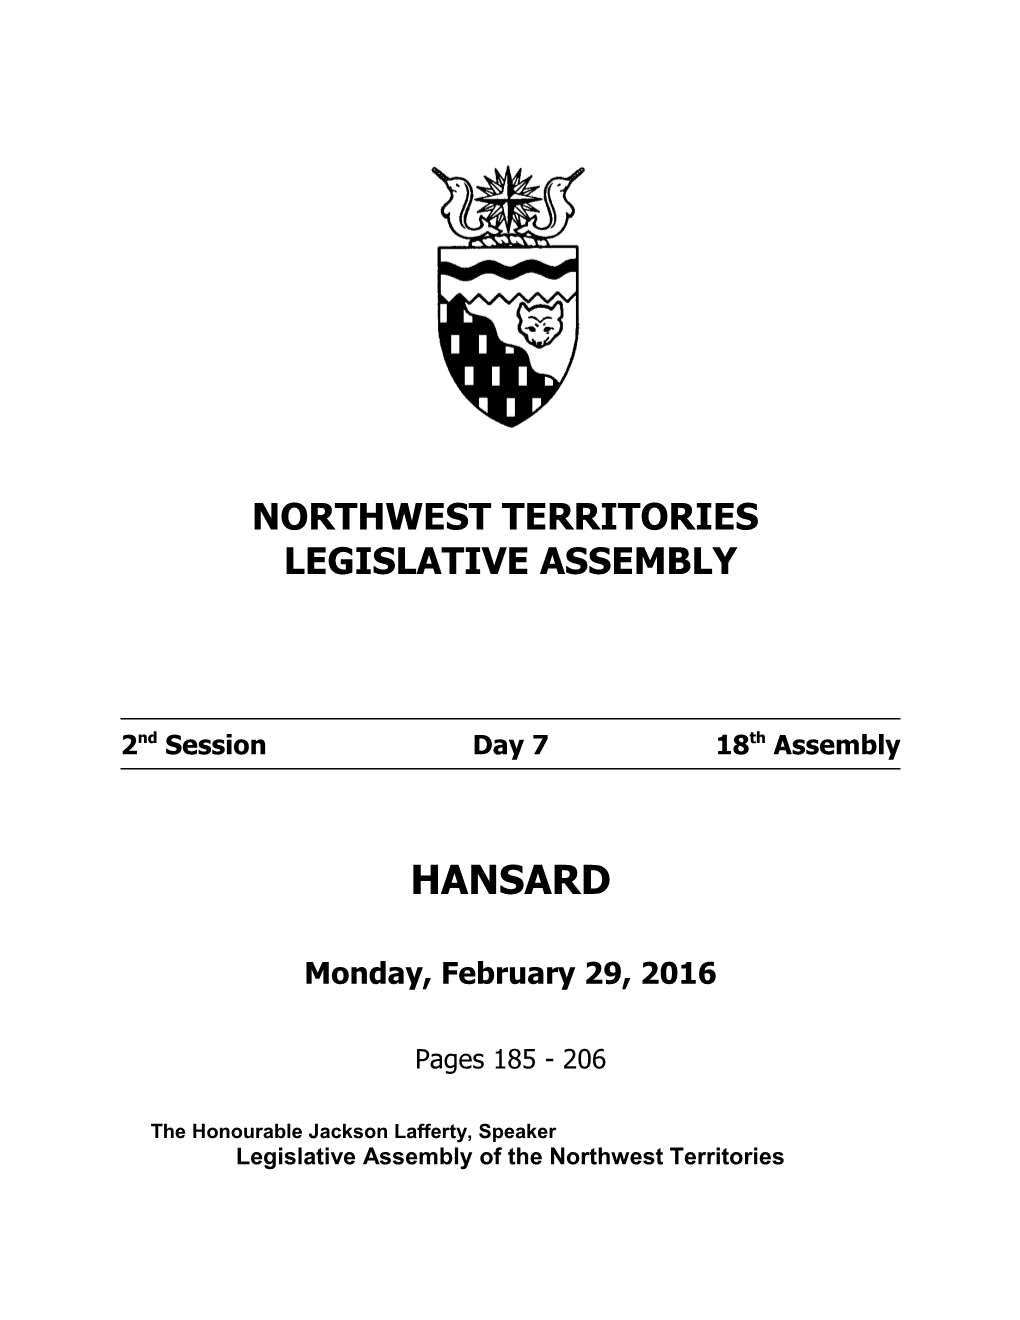 Hansard of the Legislative Assembly of the Northwest Territories; for Official Hansard s2